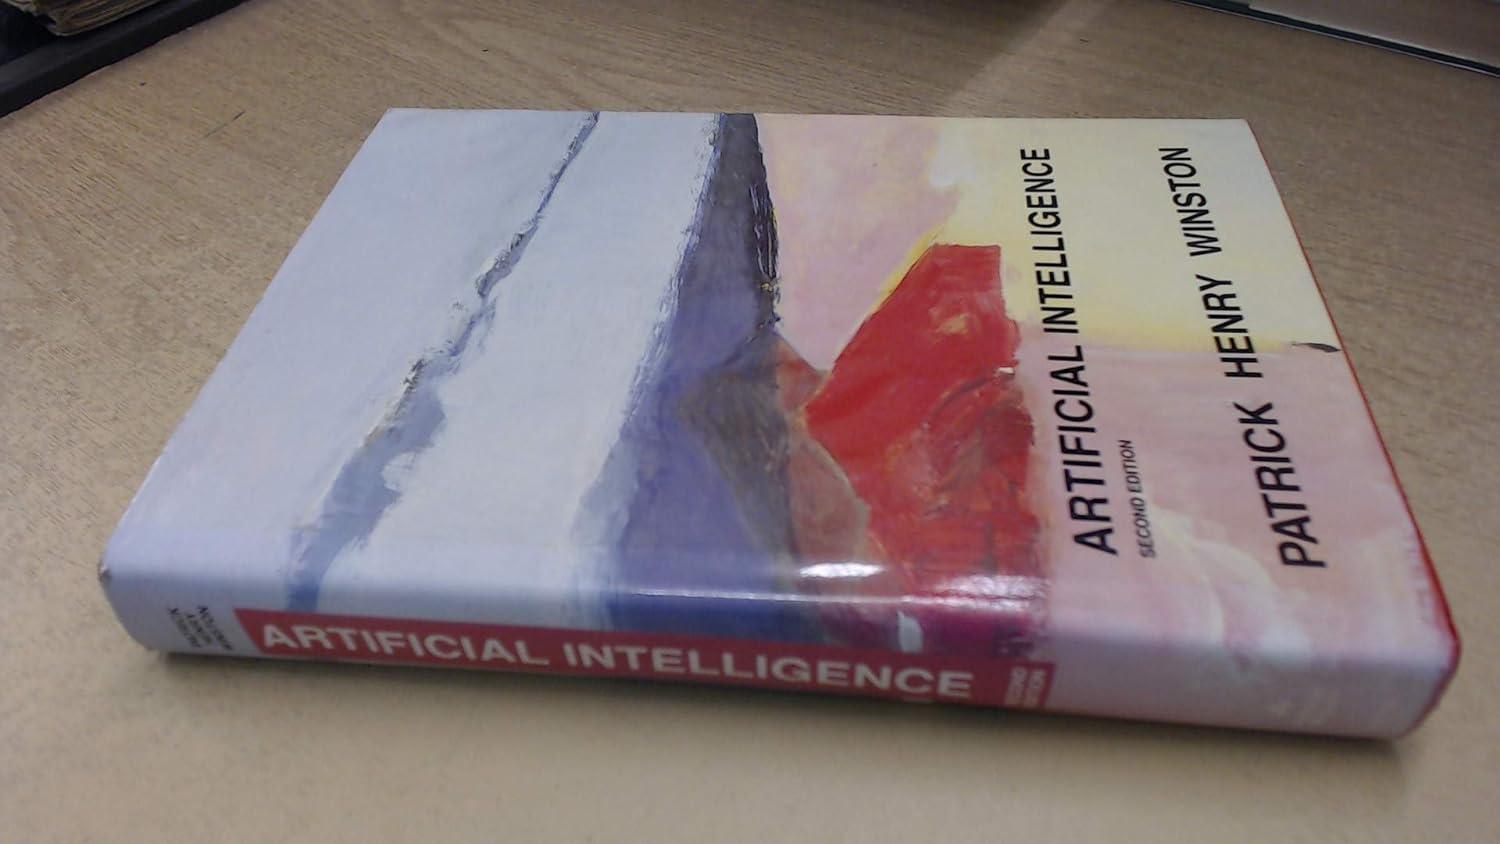 artificial intelligence 2nd edition patrick winston 0201082594, 978-0201082593